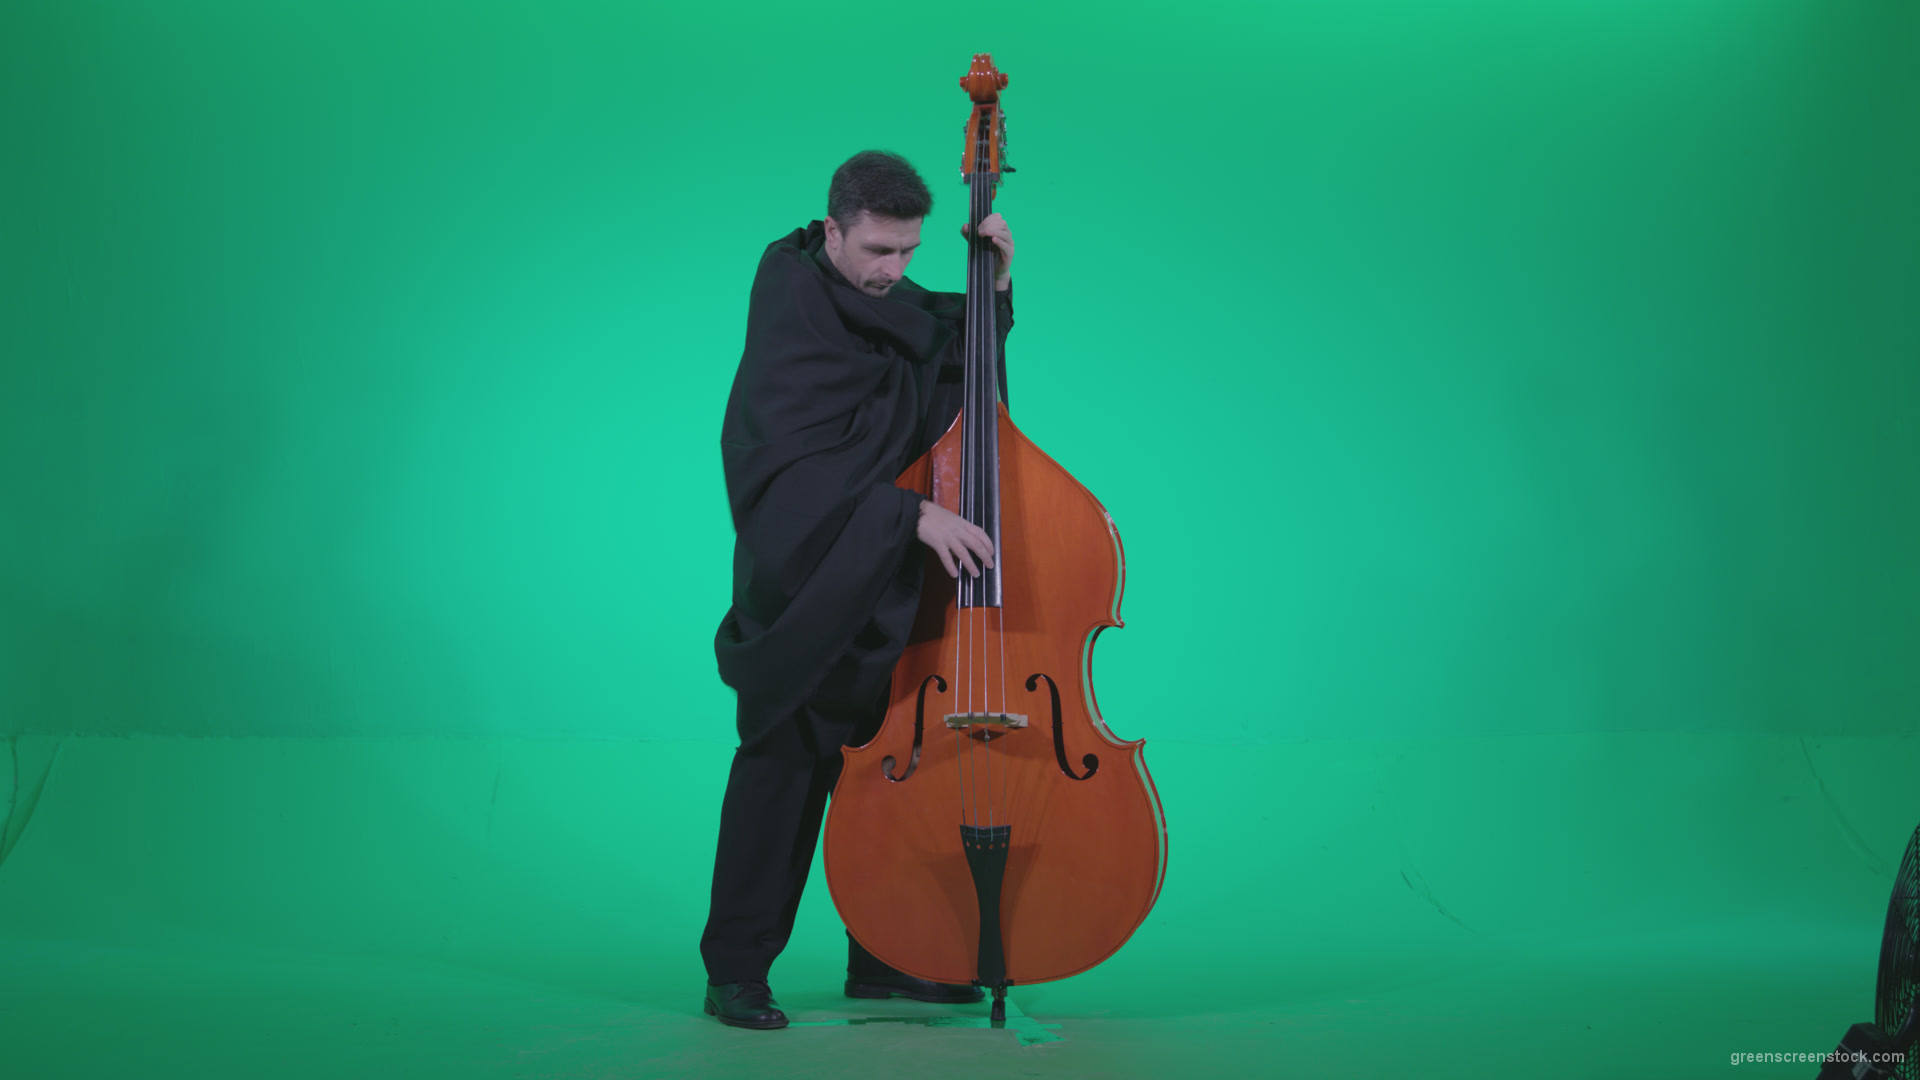 Gotic-Contrabass-Jazz-Performer-1_008 Green Screen Stock